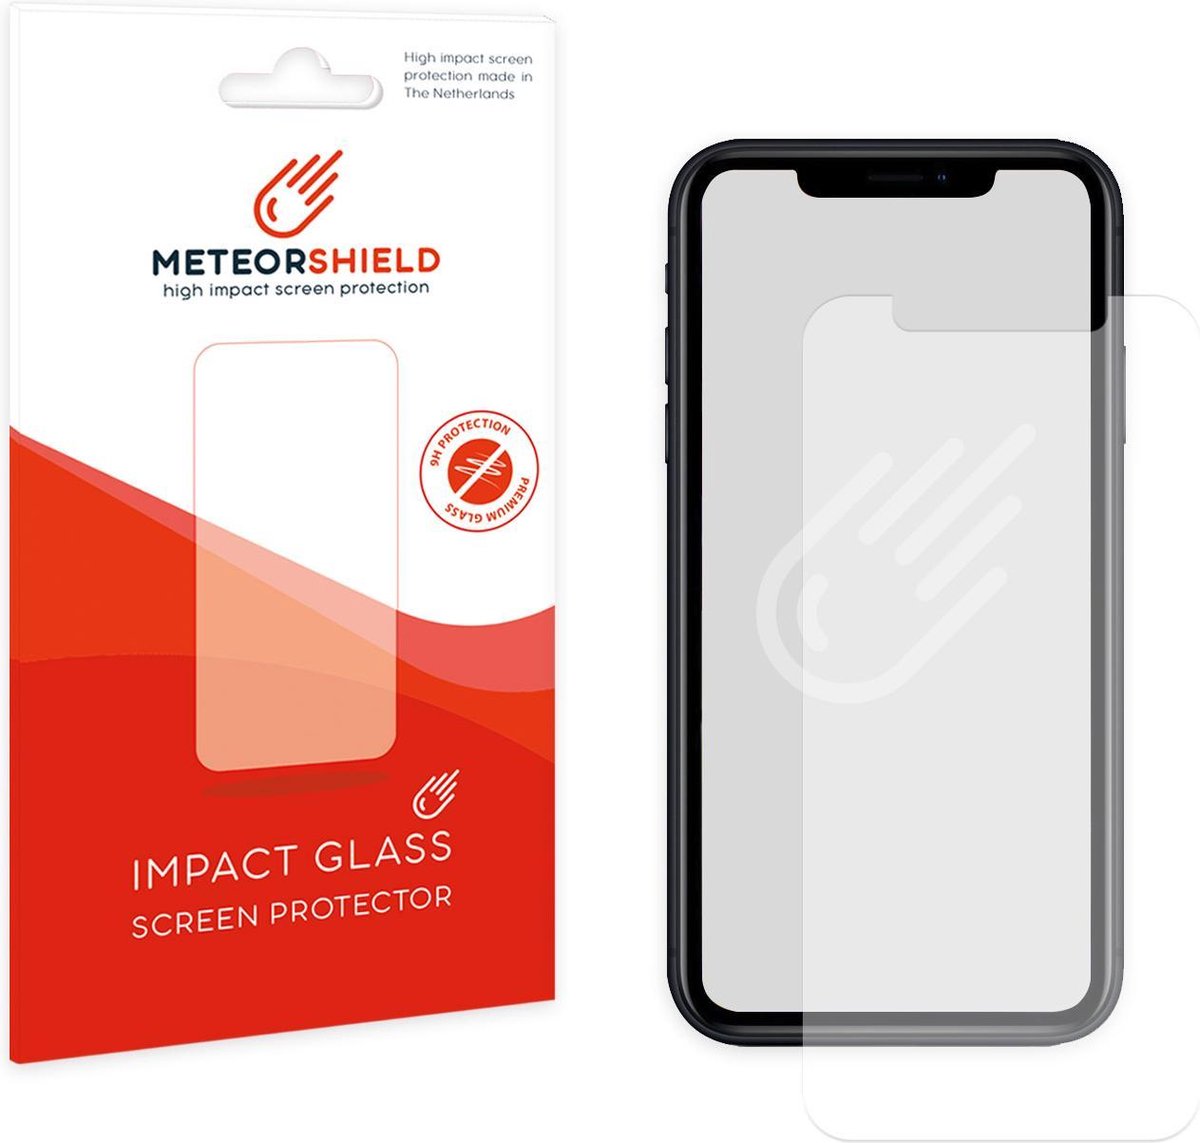 Meteorshield iPhone 11 screenprotector - Ultra clear impact glass